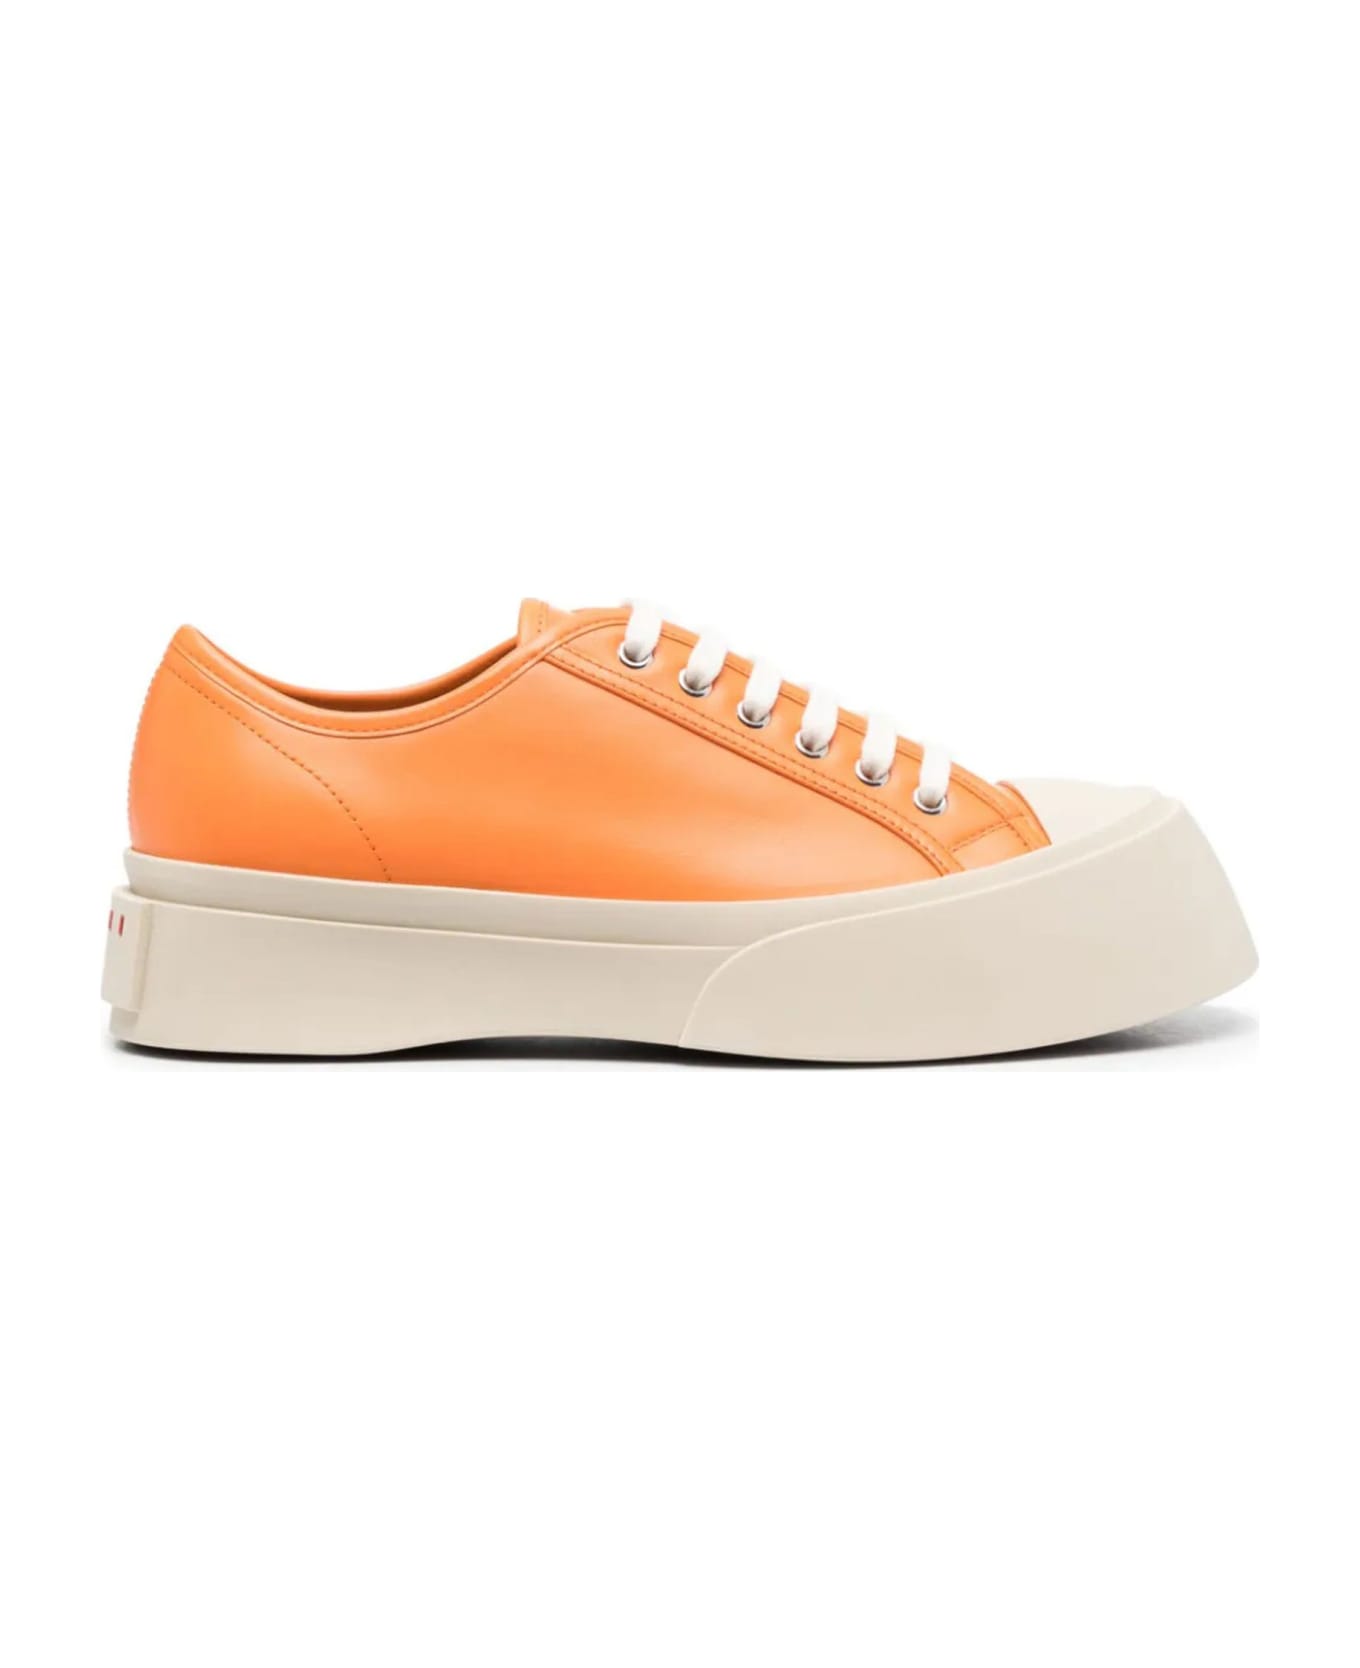 Marni Orange Soft Calf Leather Pablo Sneaker - Orange